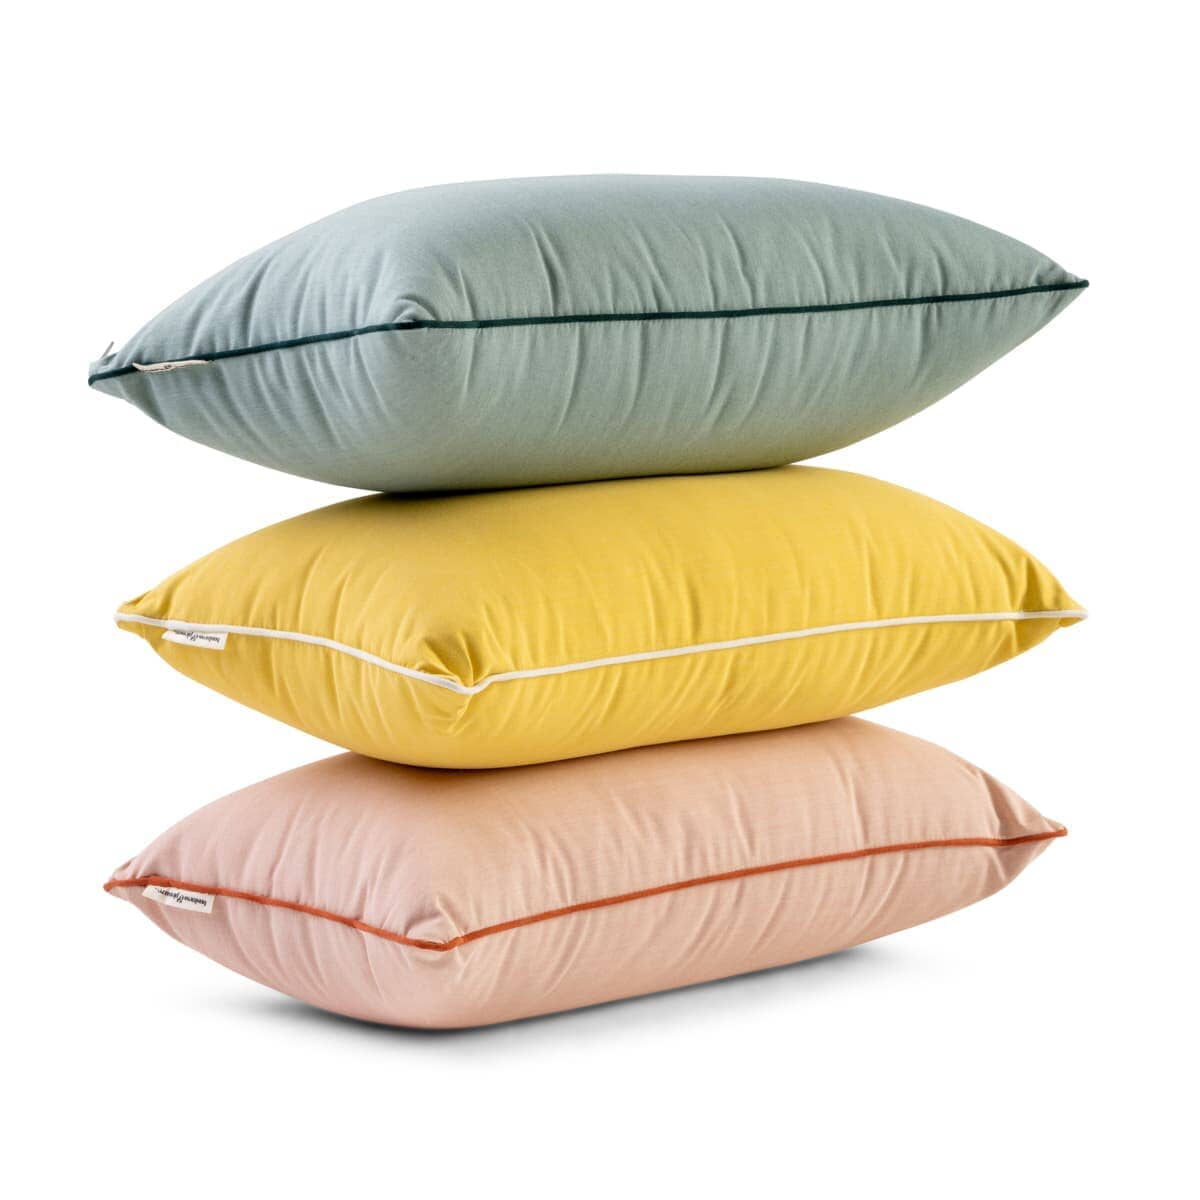 Studio image of riviera throw pillows